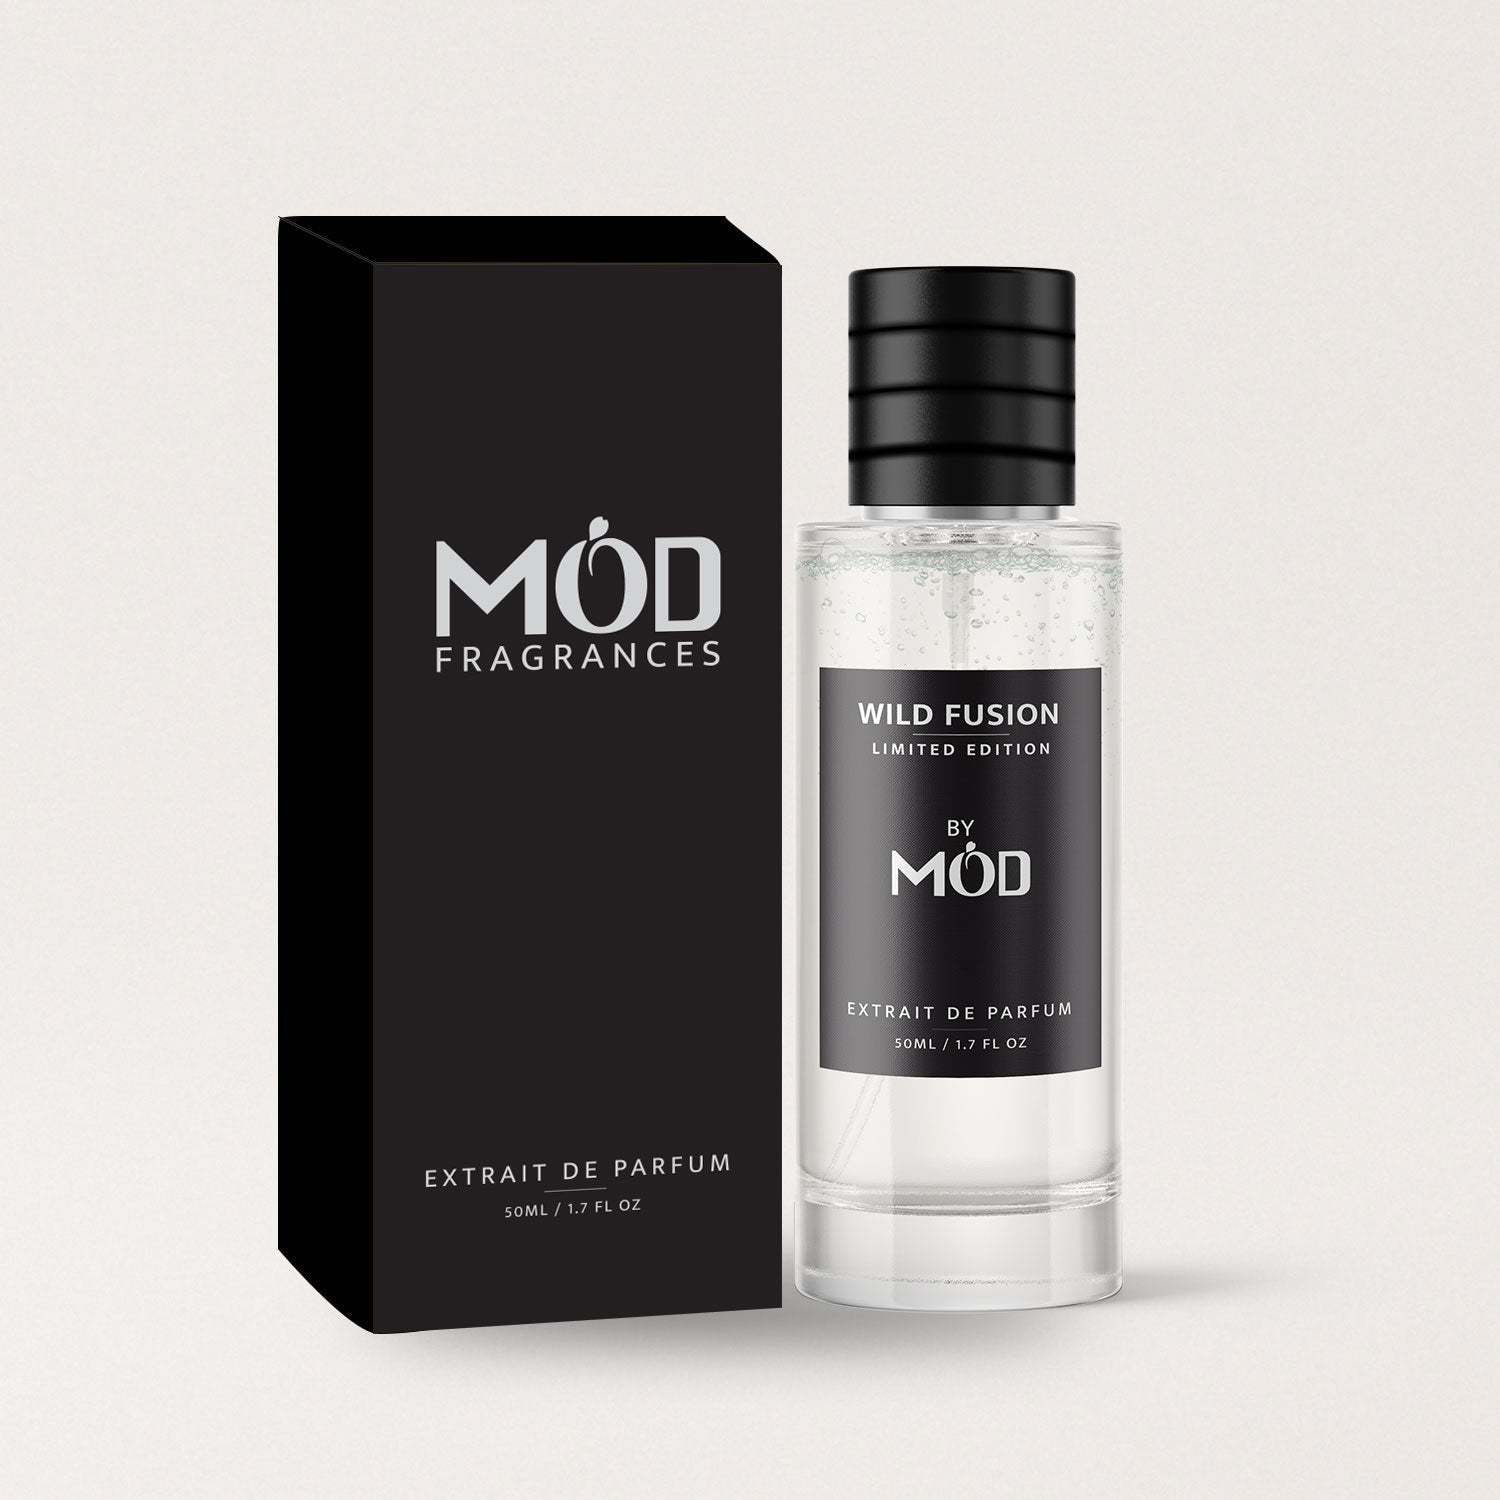 Wild Fusion - Limited Edition - Mod Fragrances